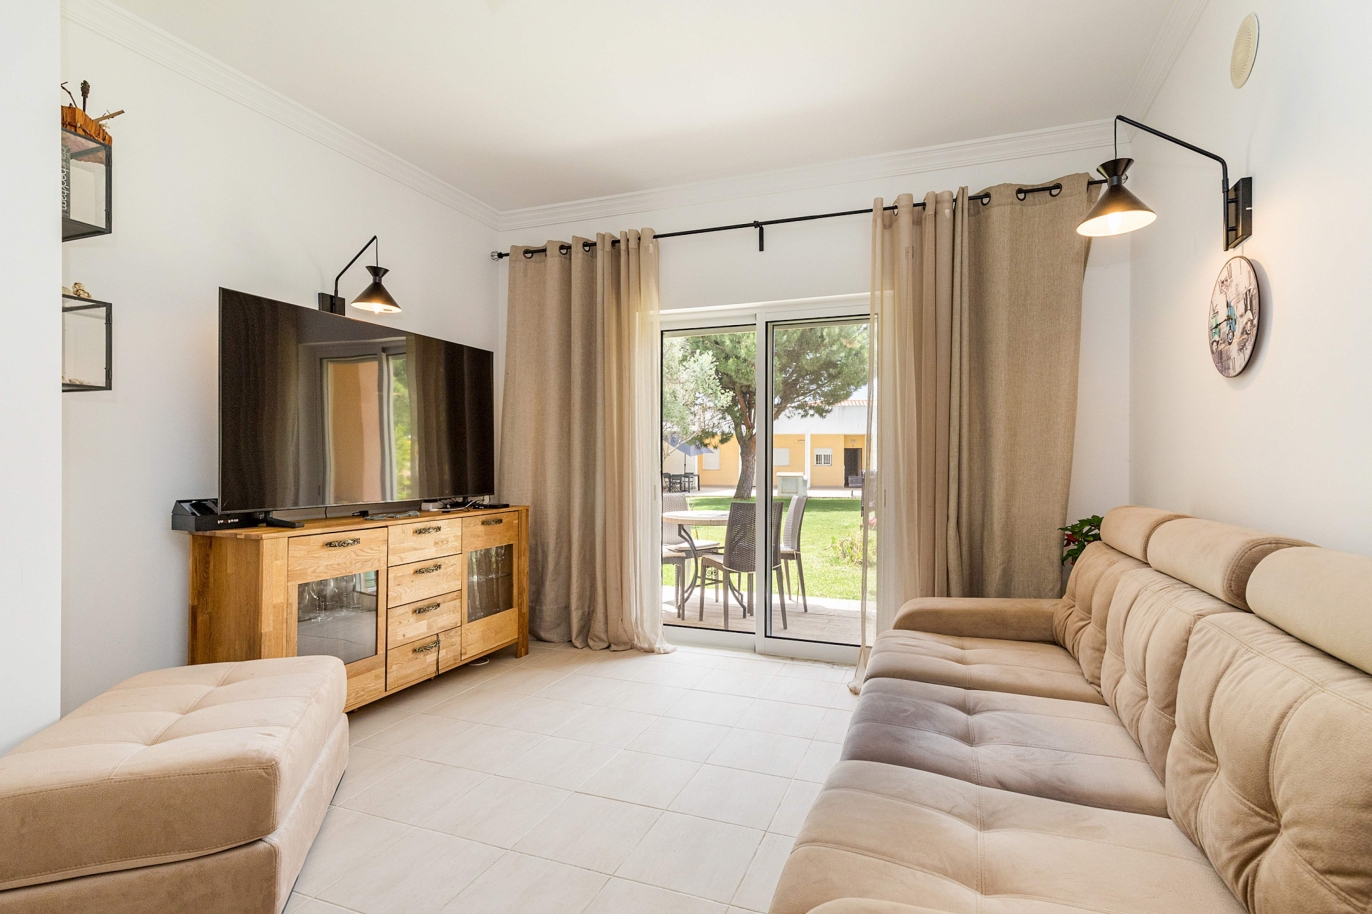 Apartamento T2, em condominio, para venda, Albufeira, Algarve_201446